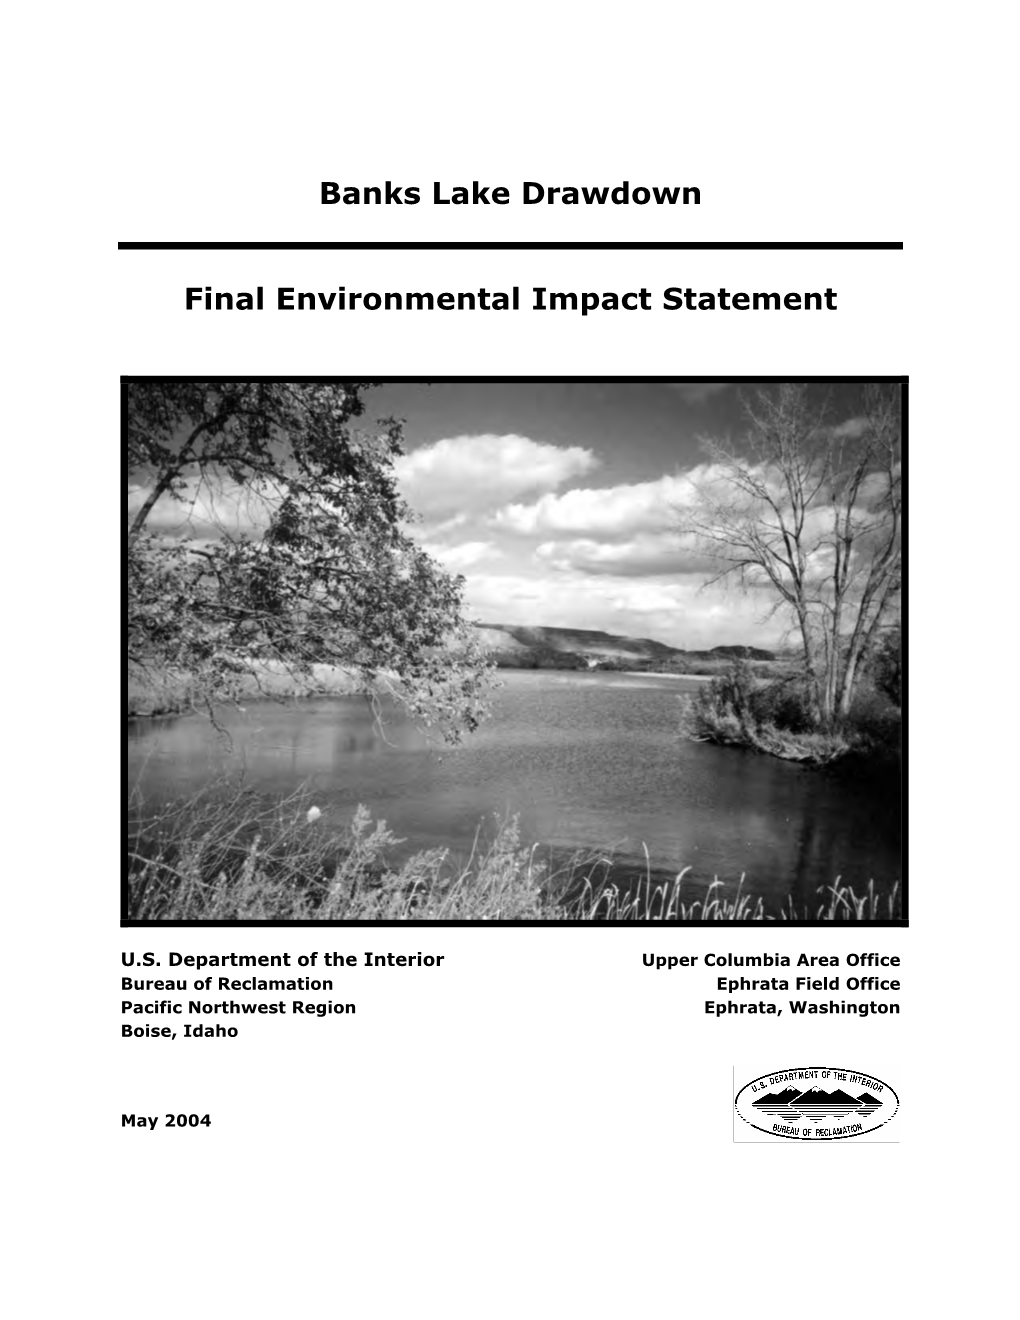 Banks Lake Drawdown Environmental Impact Statement